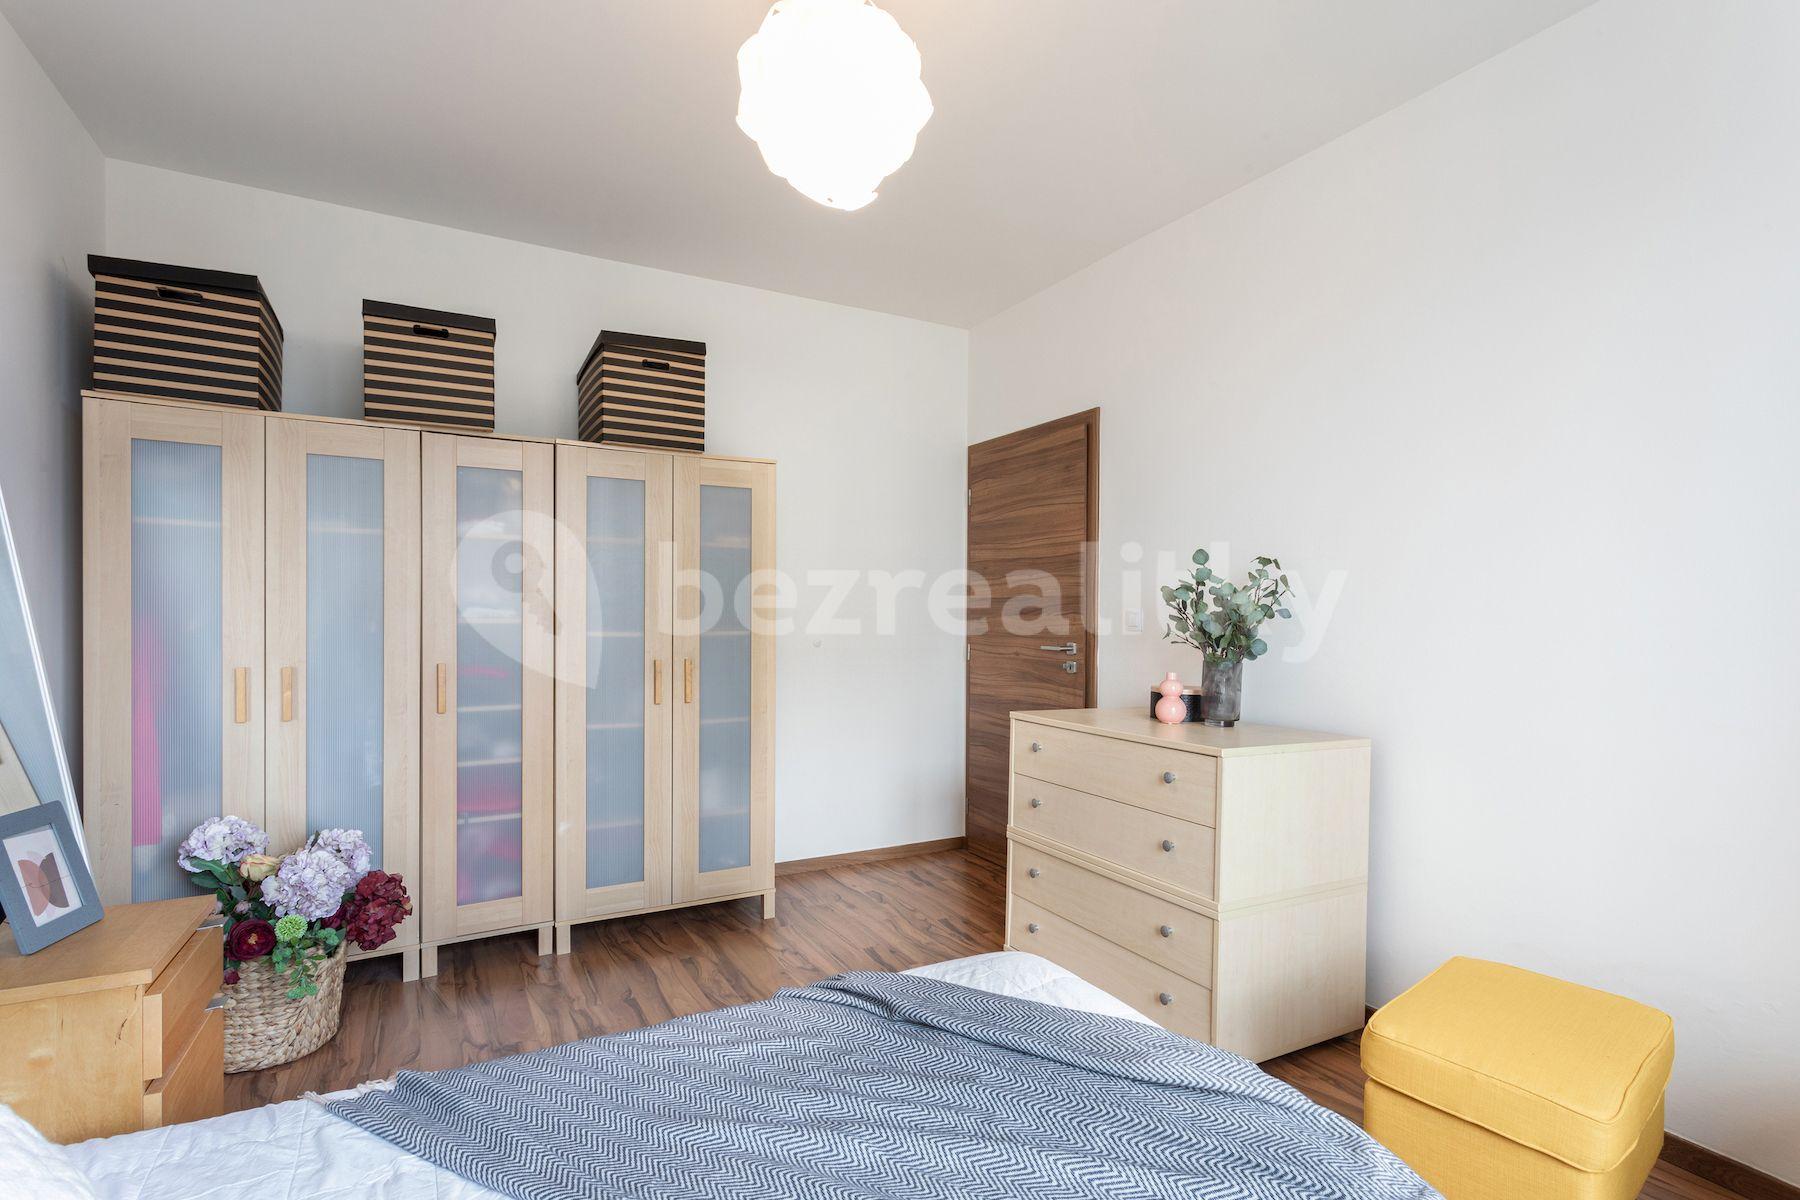 2 bedroom with open-plan kitchen flat for sale, 82 m², Sousedíkova, Prague, Prague